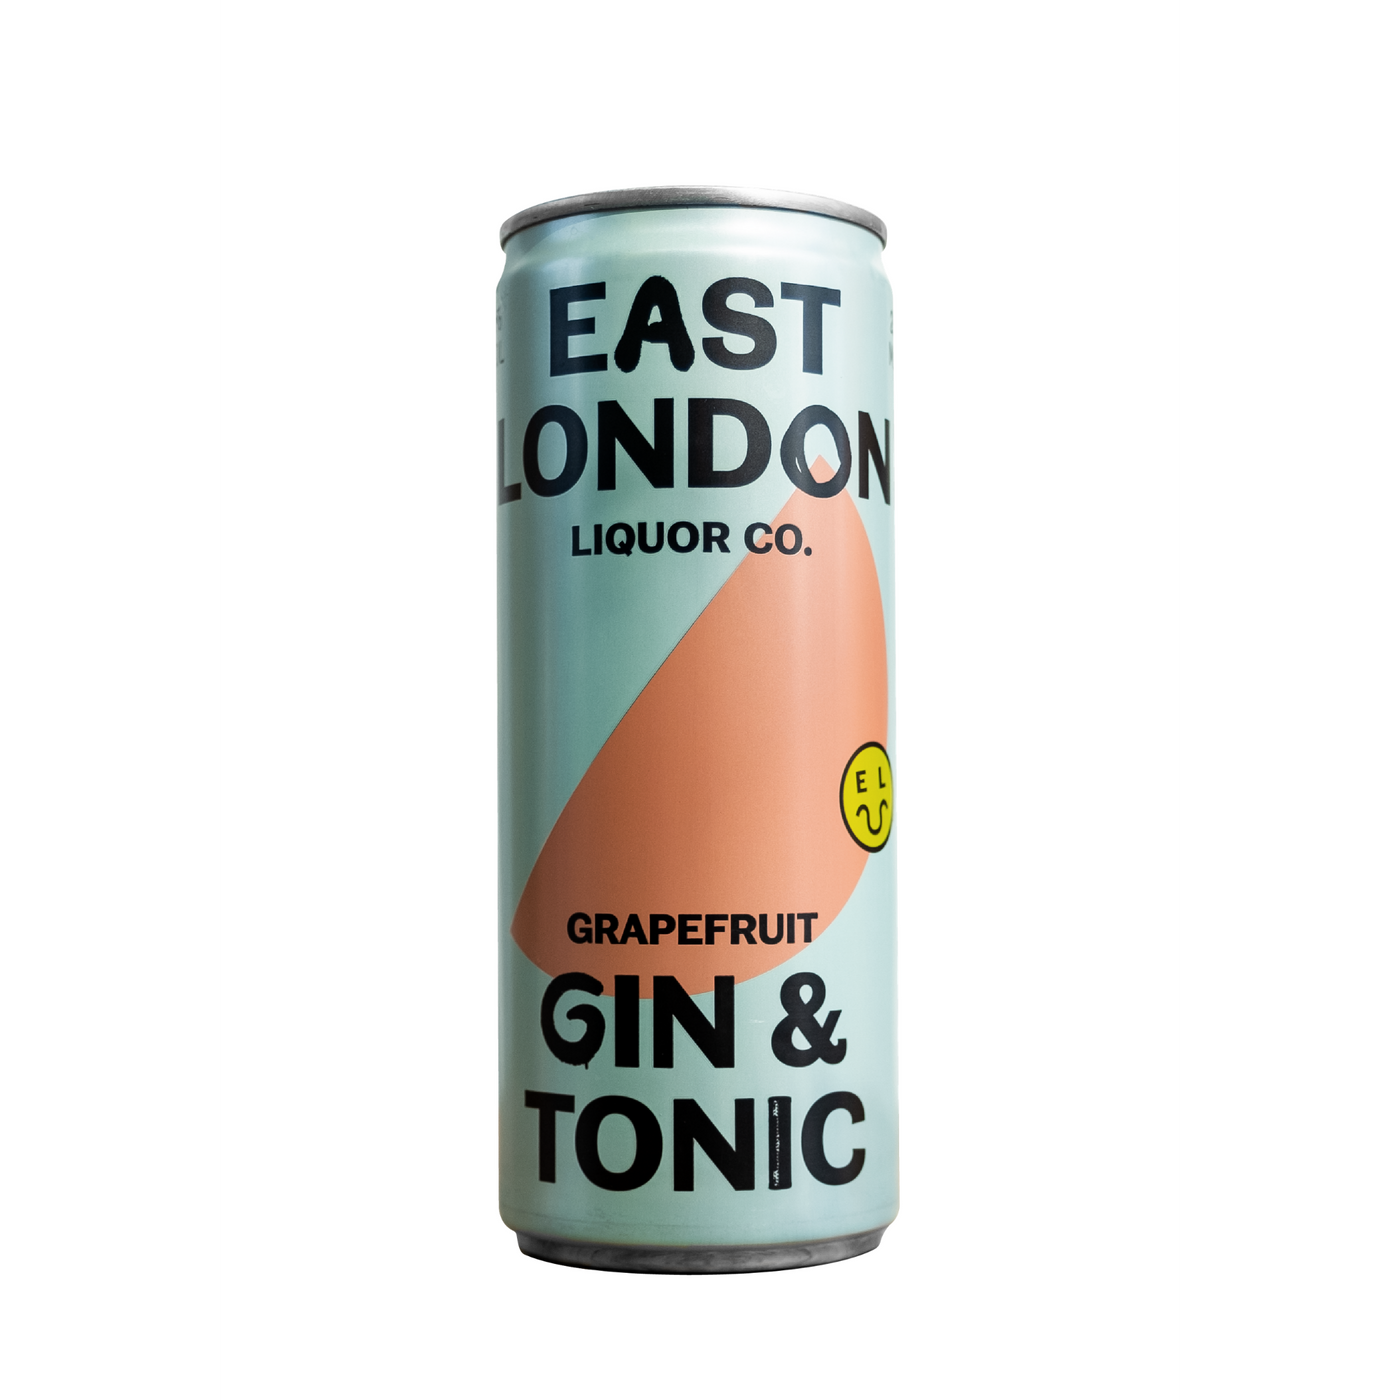 East London Grapefruit Gin & Tonic 5% 25cl can